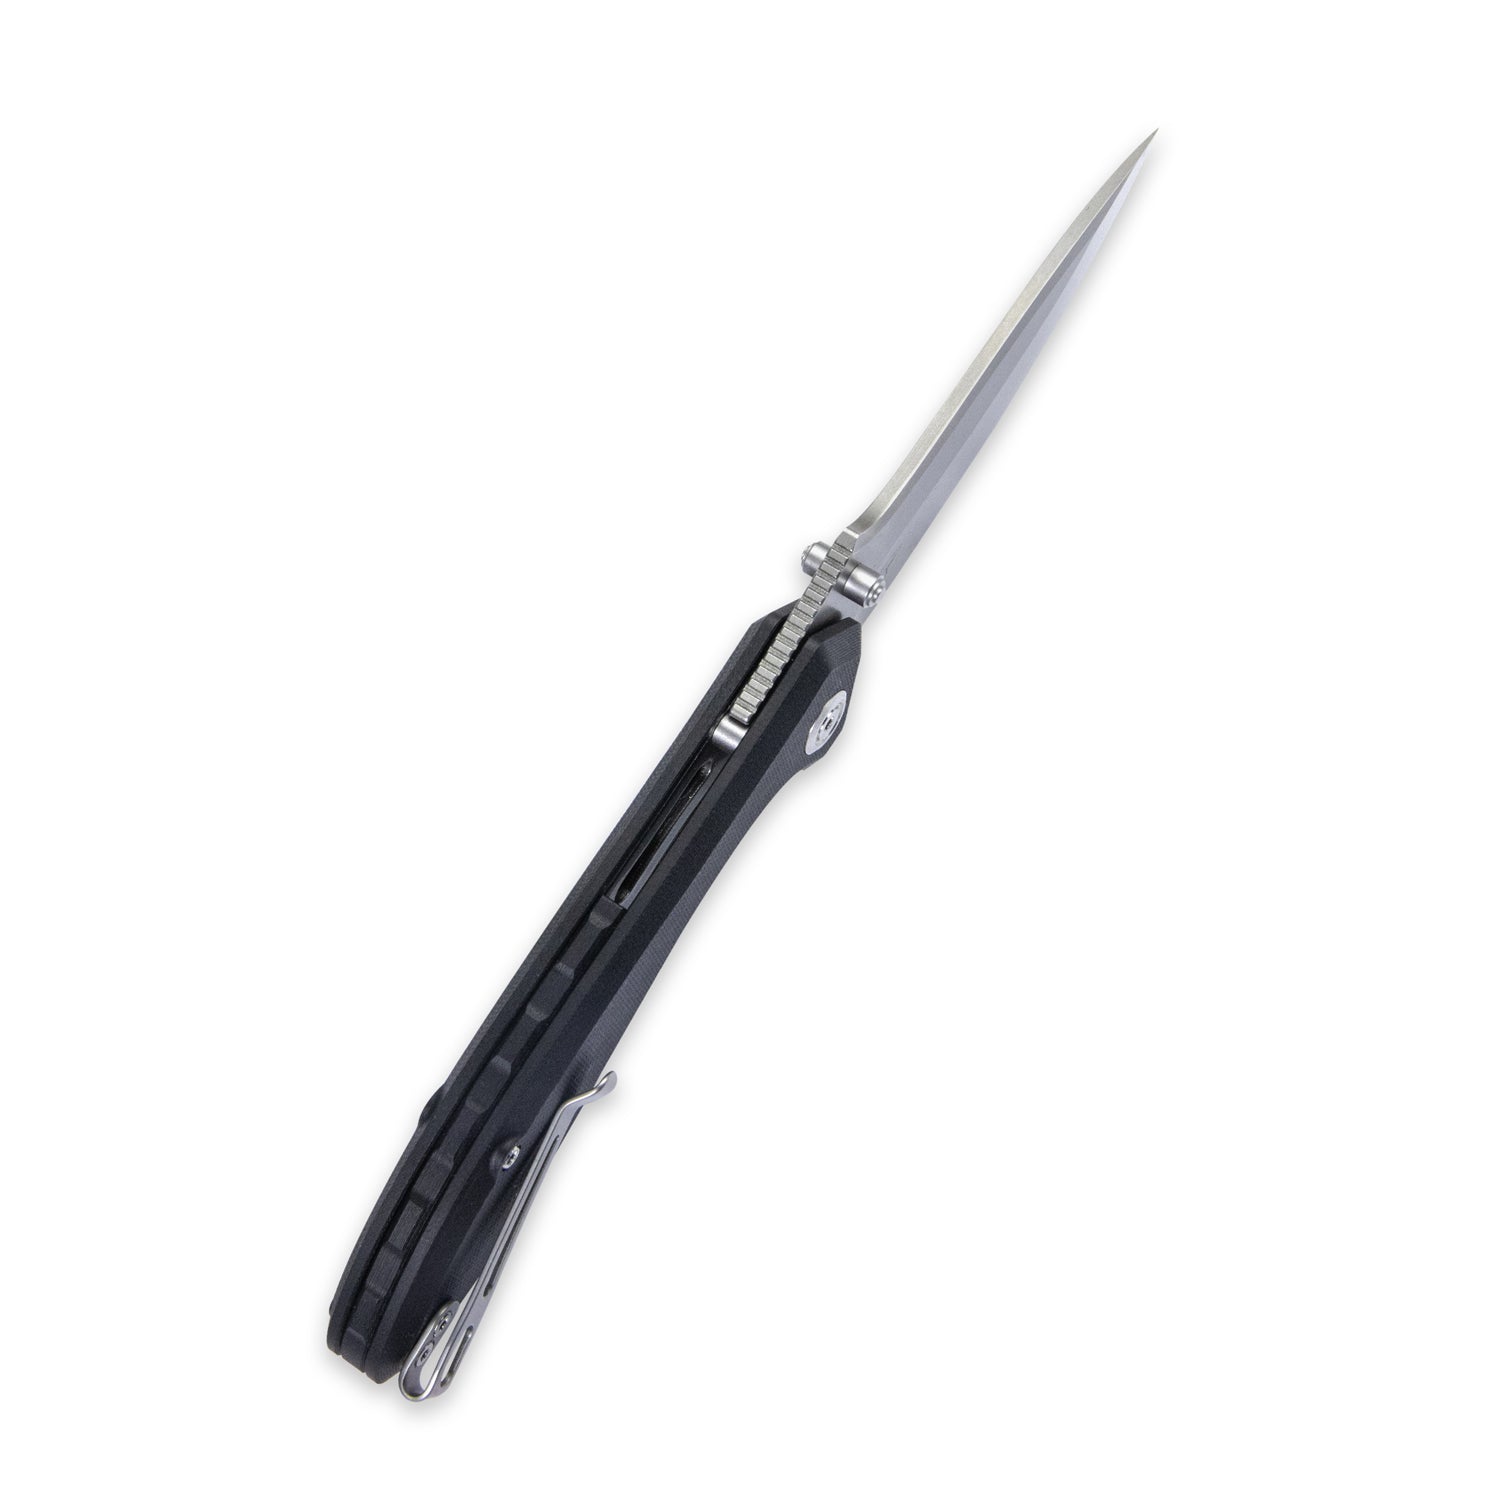 Kubey Ruckus Liner Lock Folding Knife Black G10 Handle 3.31" Bead Blasted AUS-10 KU314F